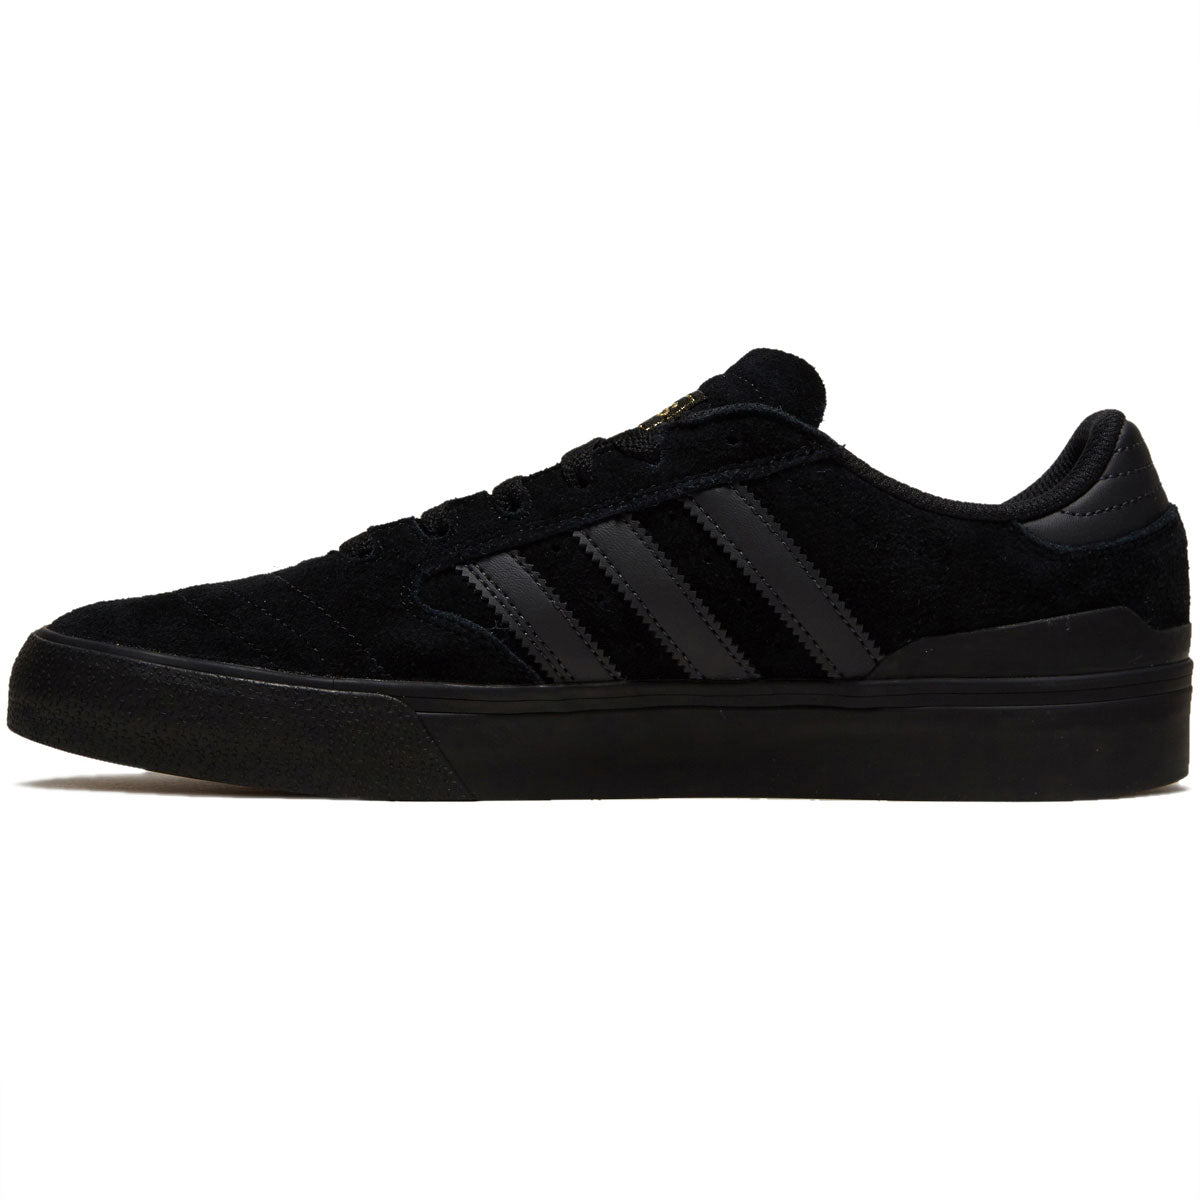 Adidas Busenitz Vulc II Shoes - Core Black/Carbon/Core Black image 2